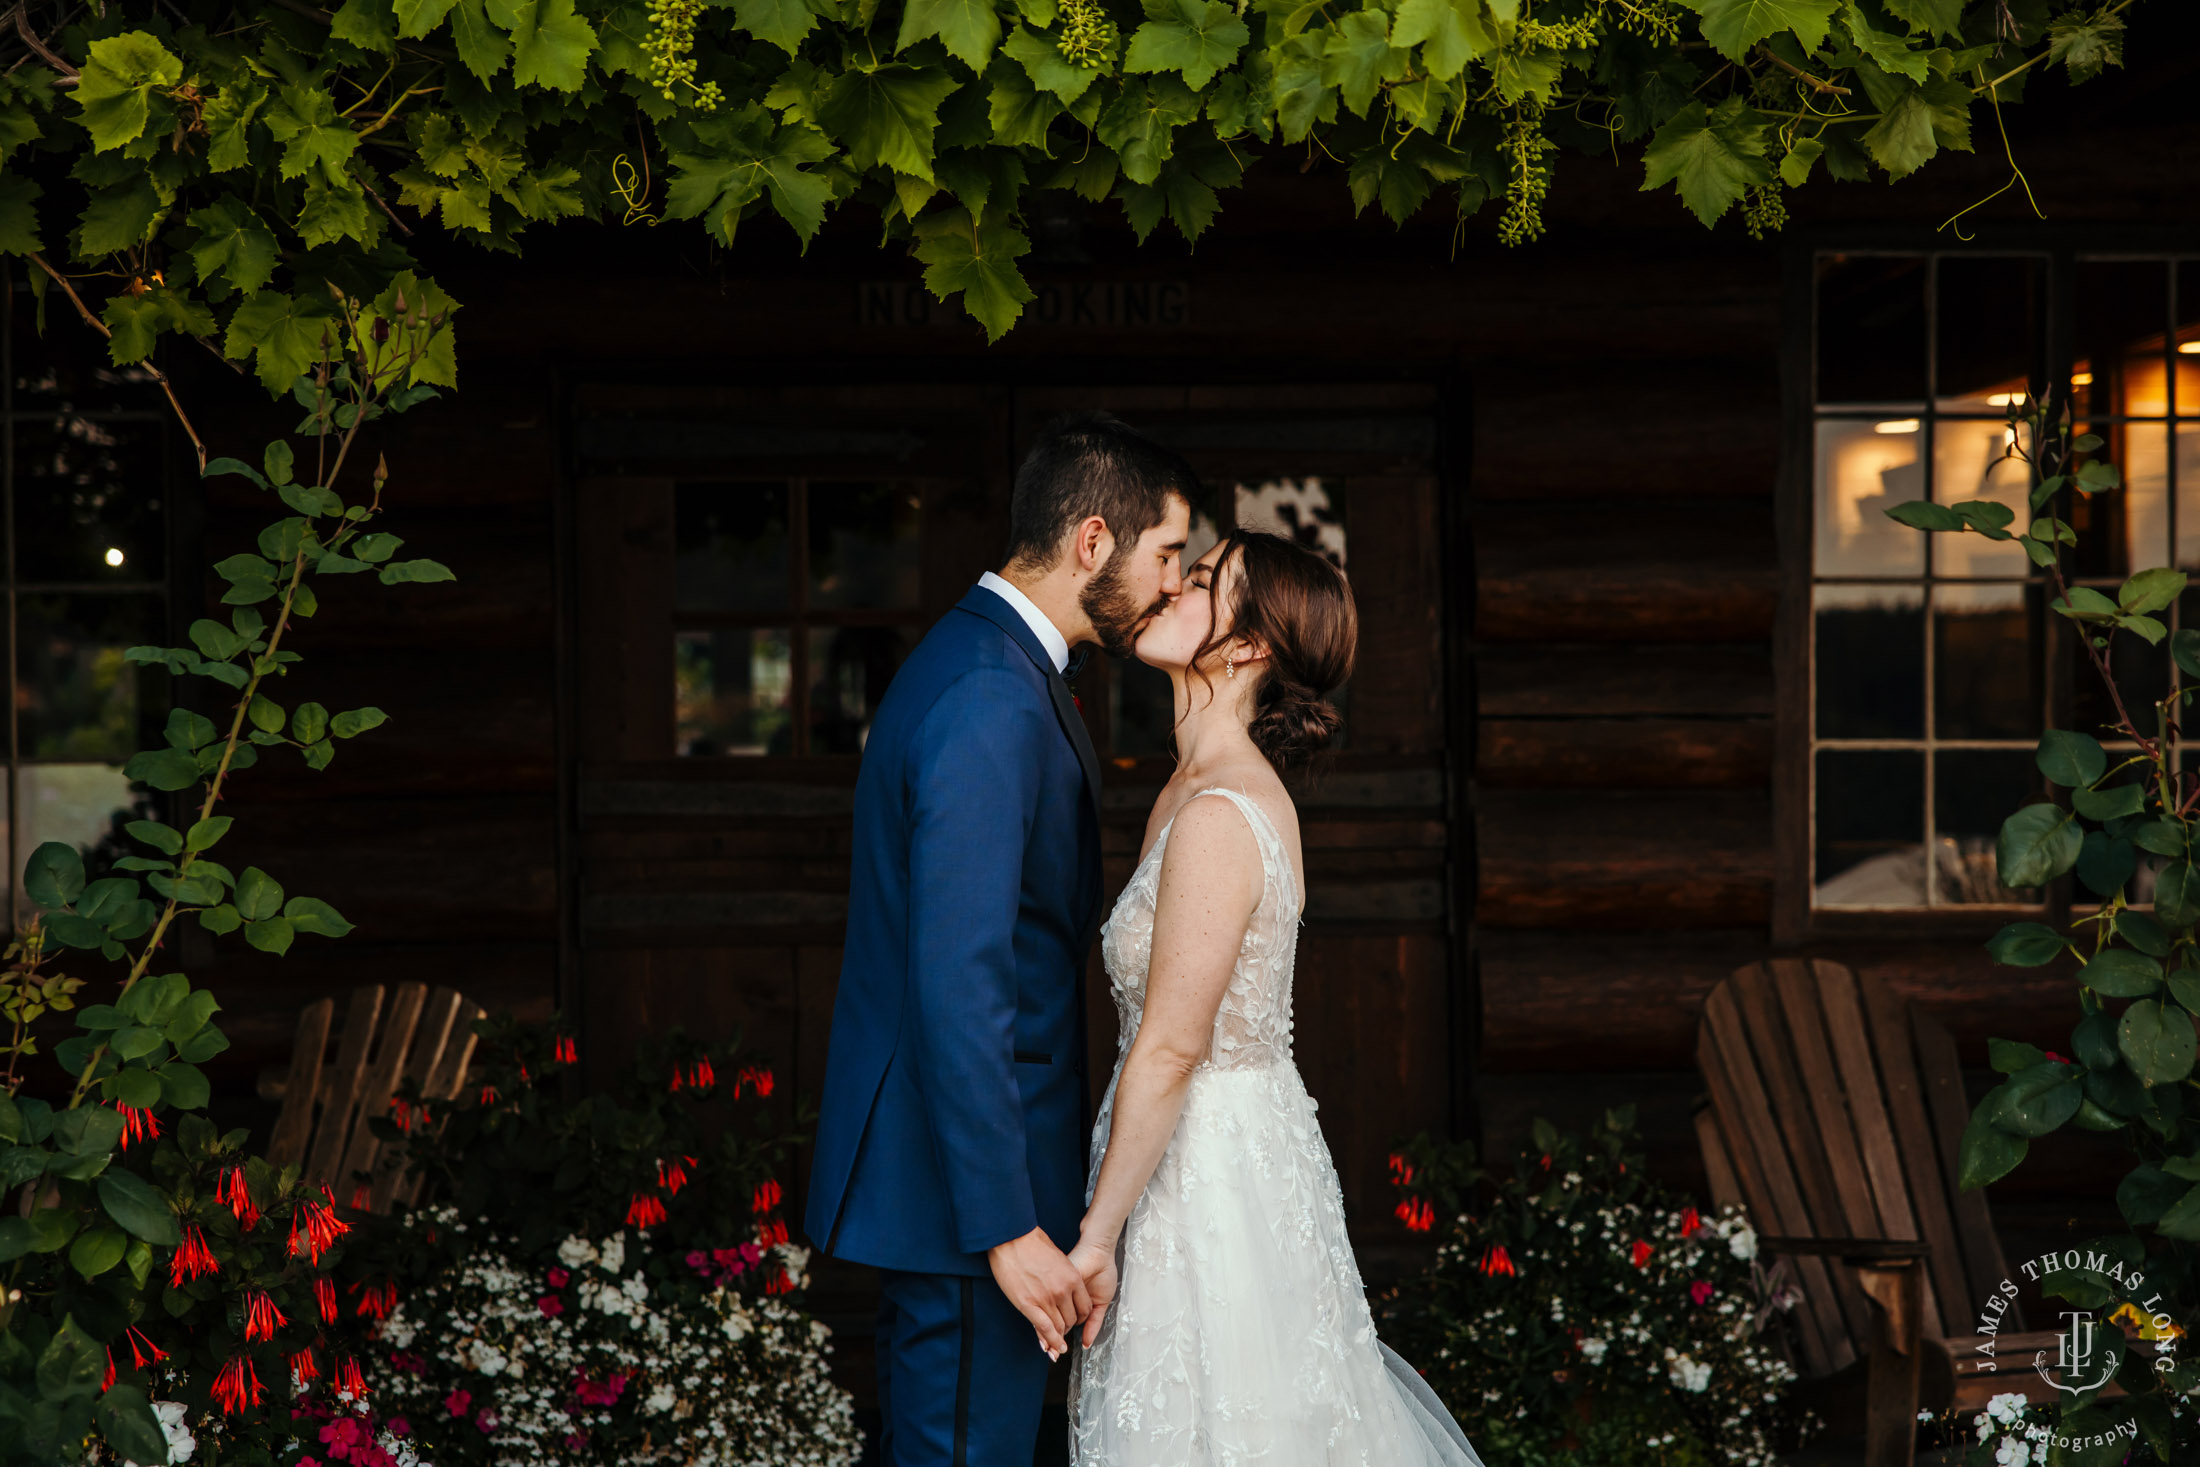 Kiana Lodge Poulsbo WA wedding by Seattle wedding photographer James Thomas Long Photography